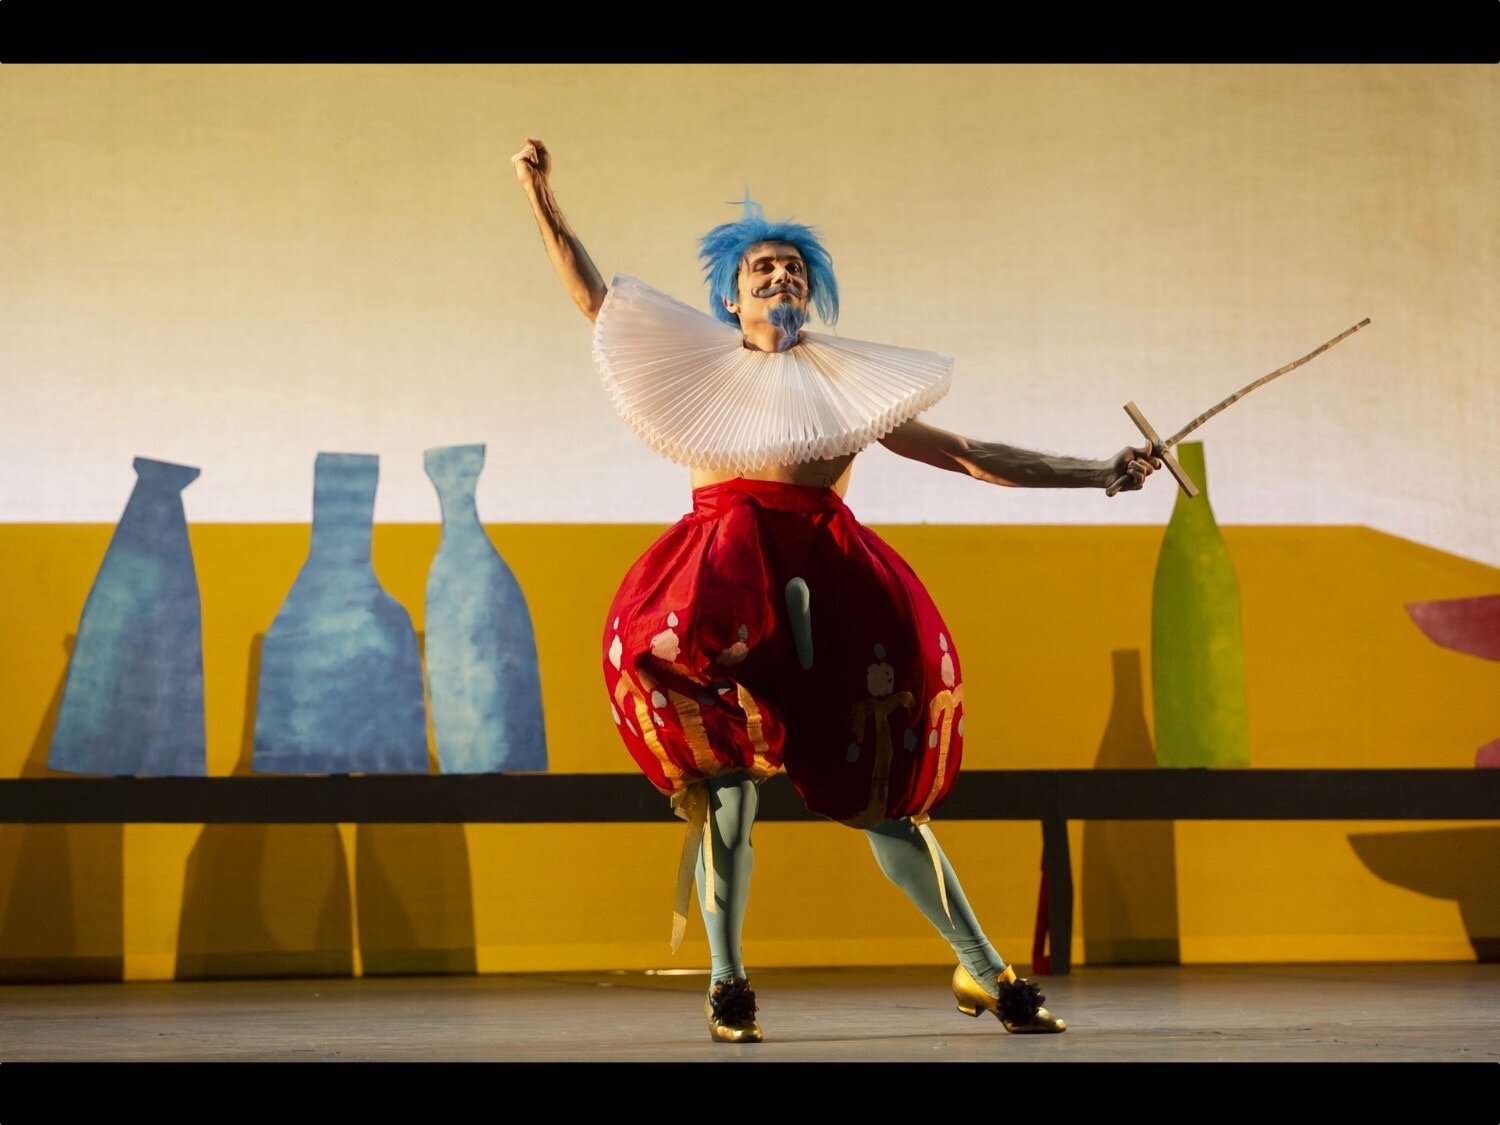  Don Quixotea ballet choreographed by Mikhail BaryshnikovTeatro dell'Opera, Rome, 2019
© photo by Yasuko Kageyama 